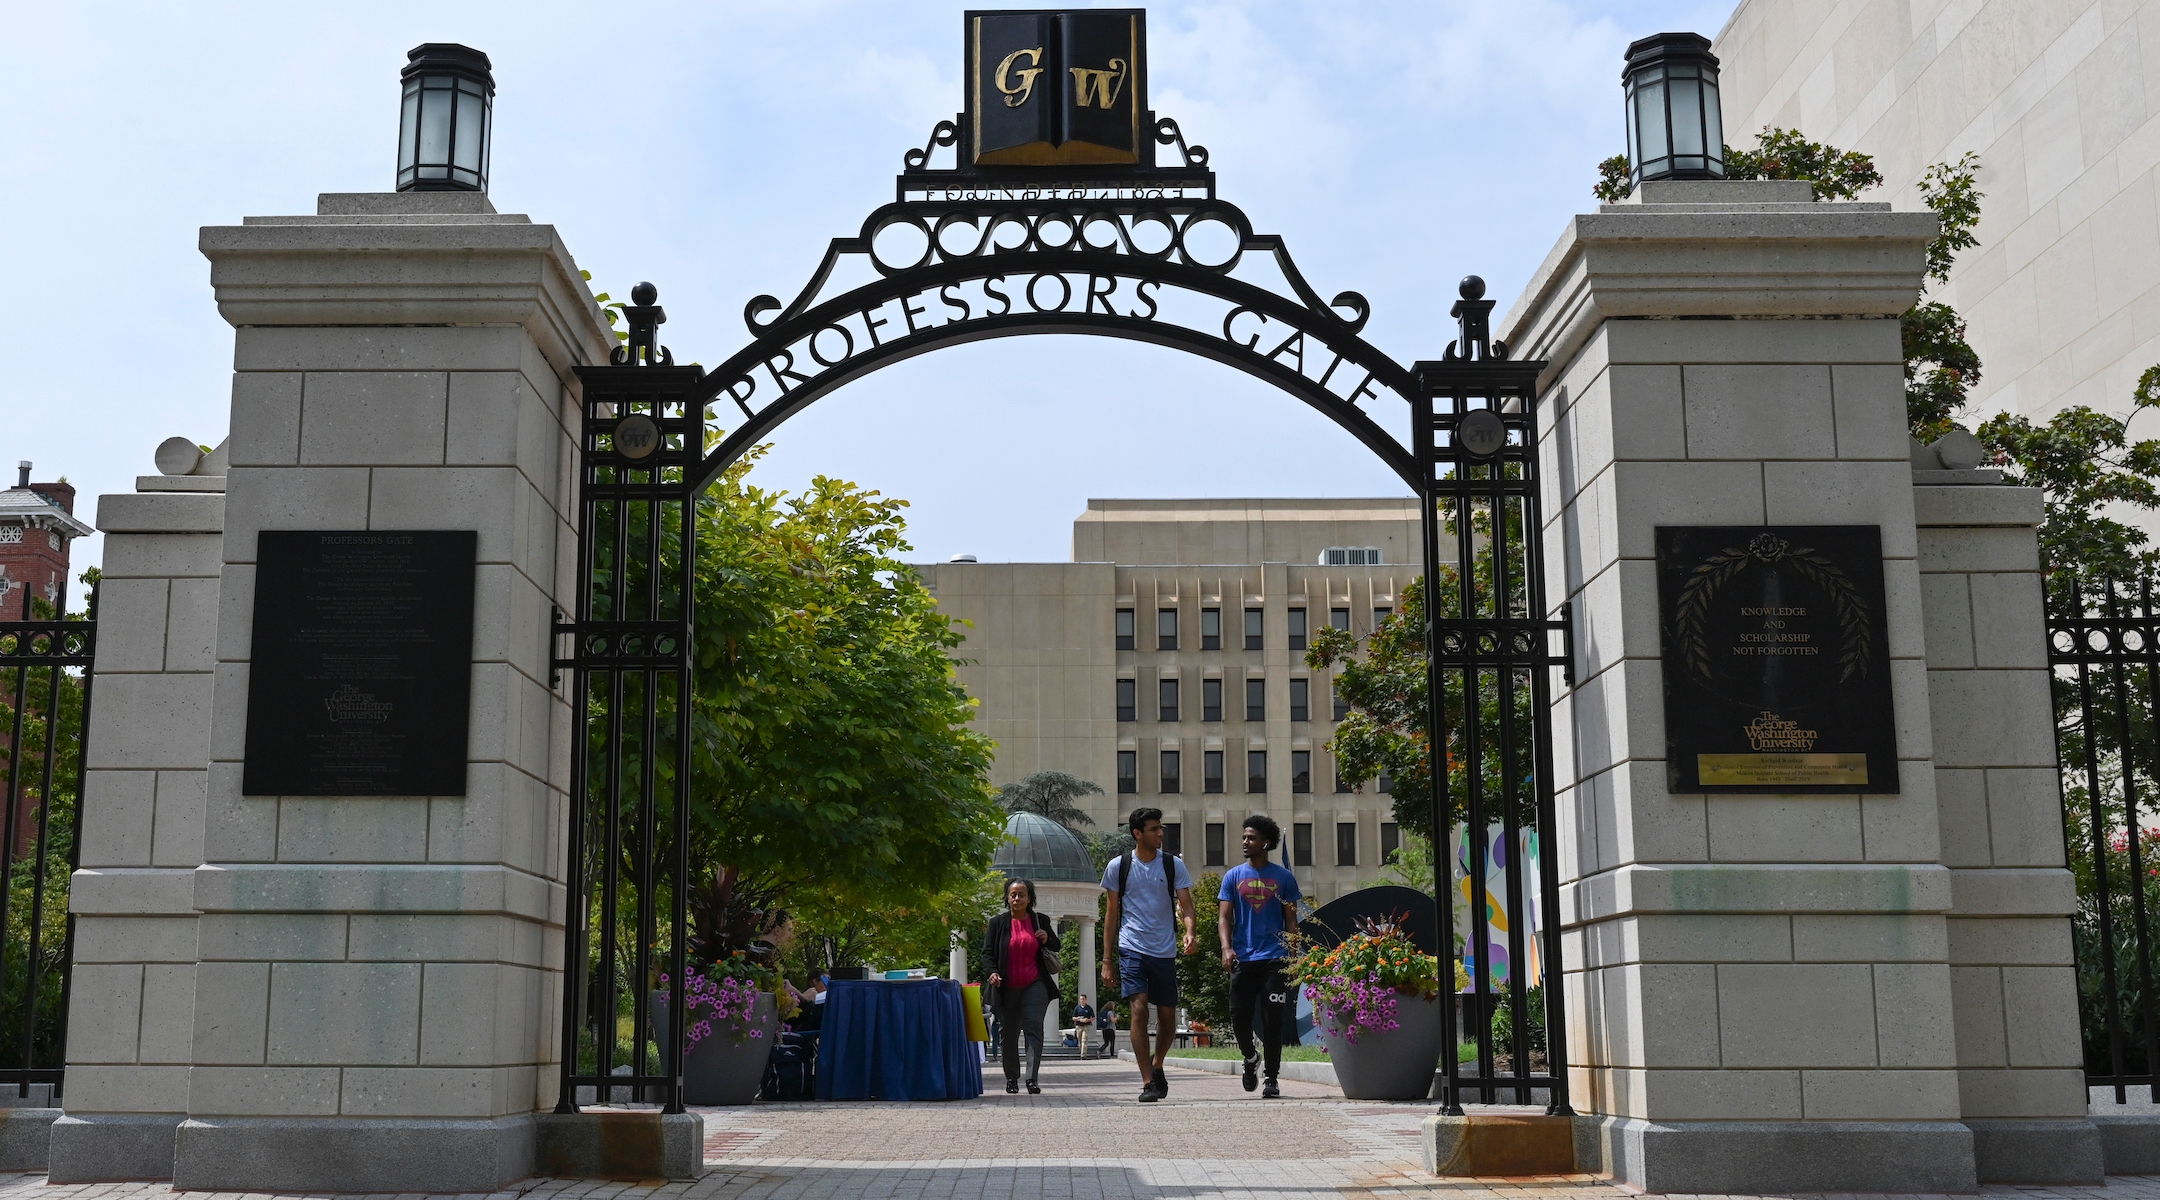 George Washington University students pass through campus. (Toni L. Sandys/The Washington Post via Getty Images)